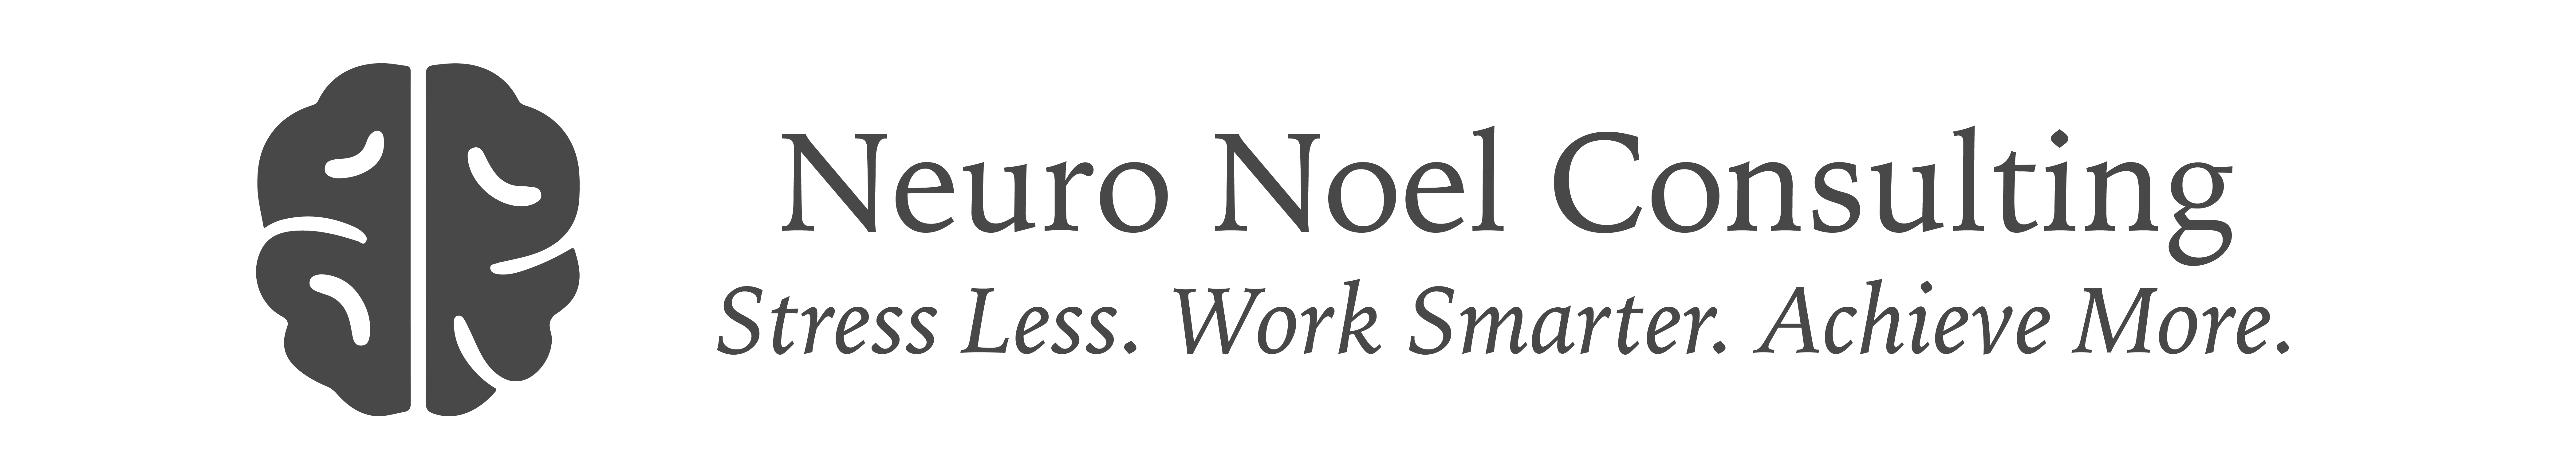 Neuro Noel Consulting